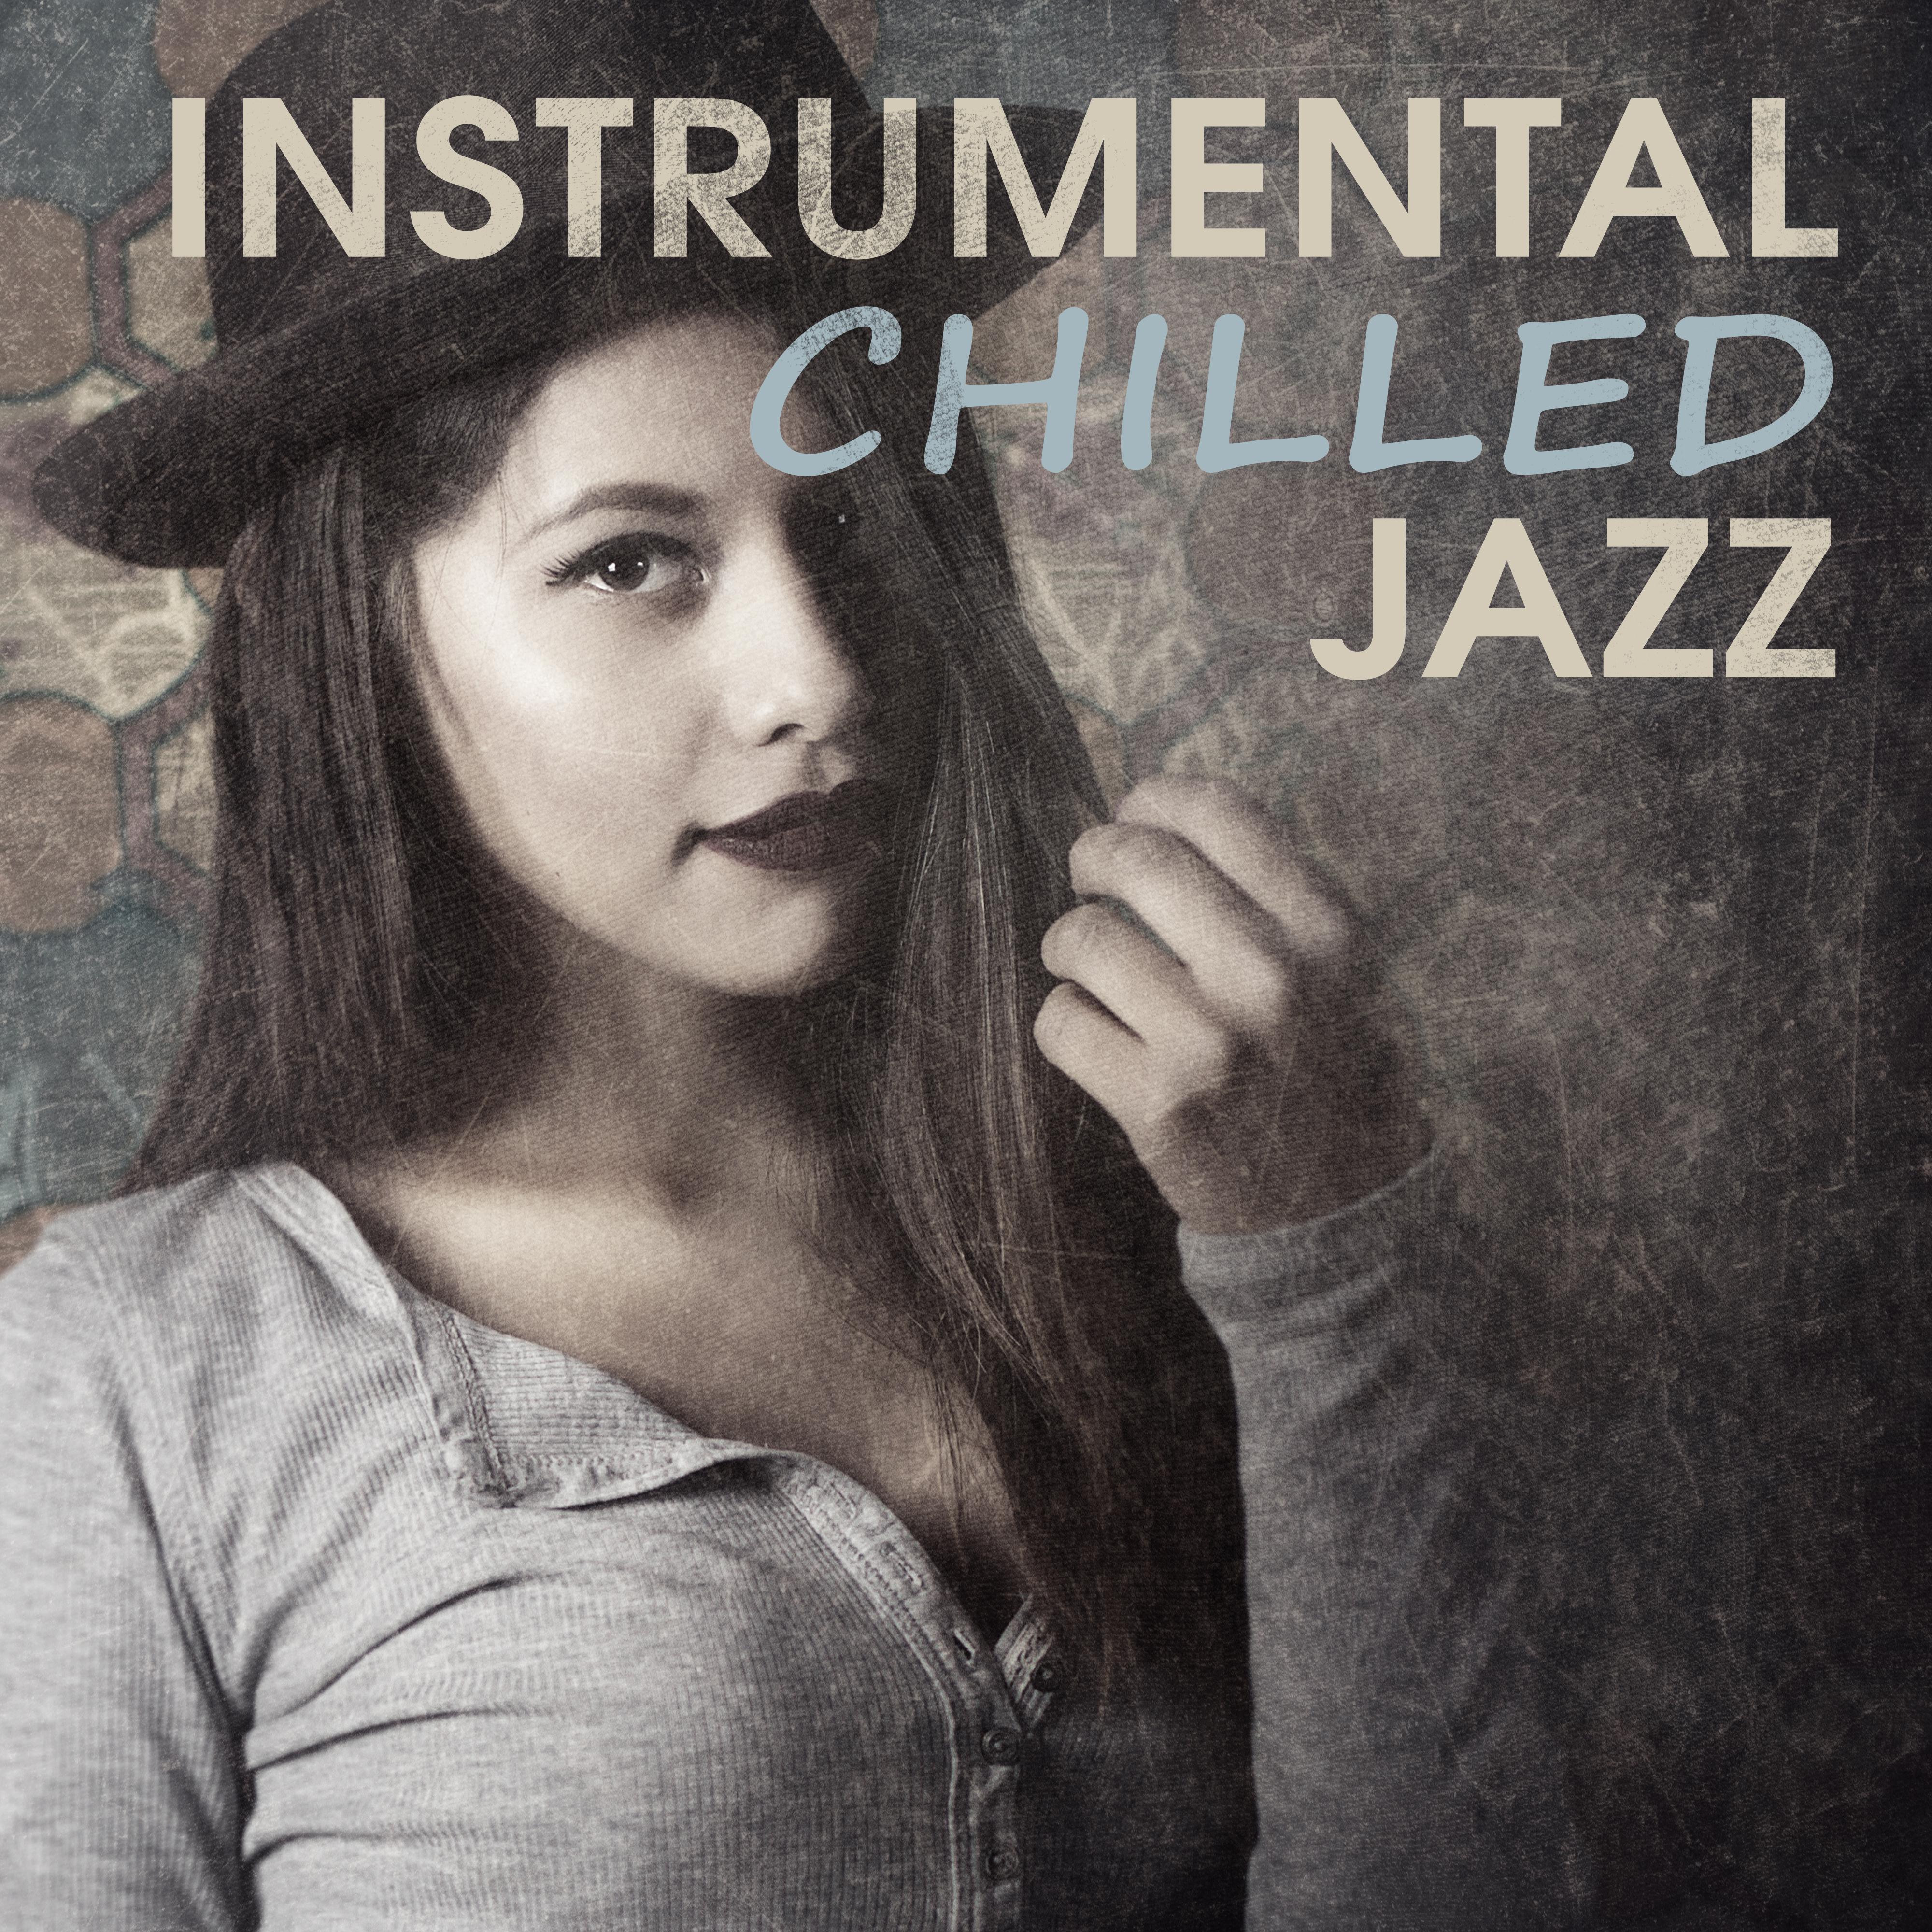 Instrumental Chilled Jazz – Smooth Jazz, Easy Listening, Piano Bar, Relax, Mellow Jazz Sounds, Light Jazz Sounds